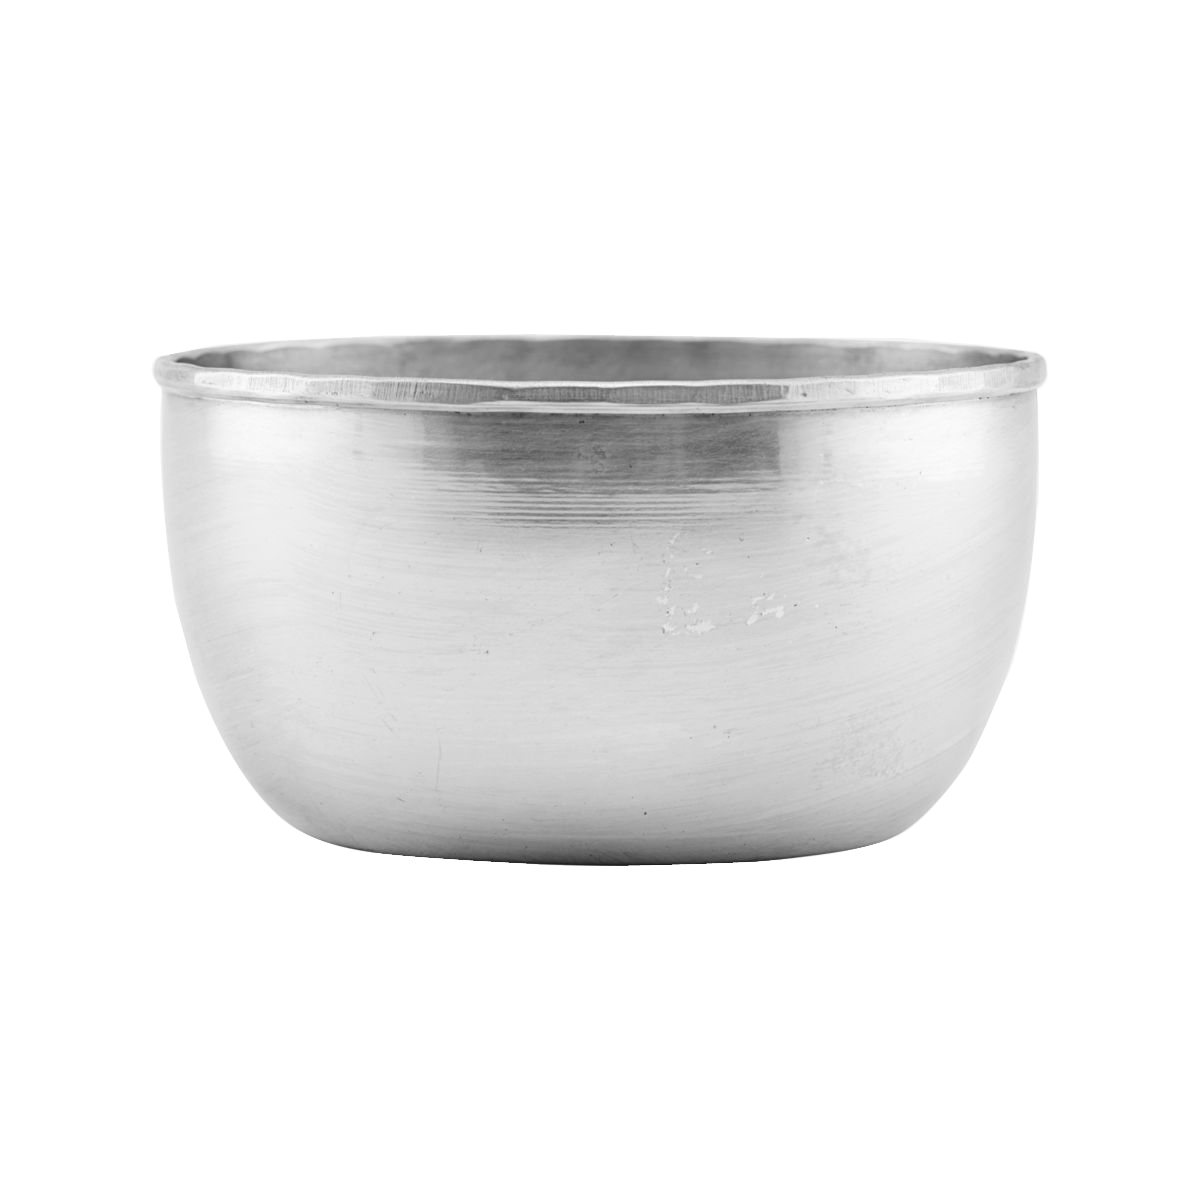 Meraki - Bowl Ø 11,5 cm - Silver Finish (303820002/303820002)